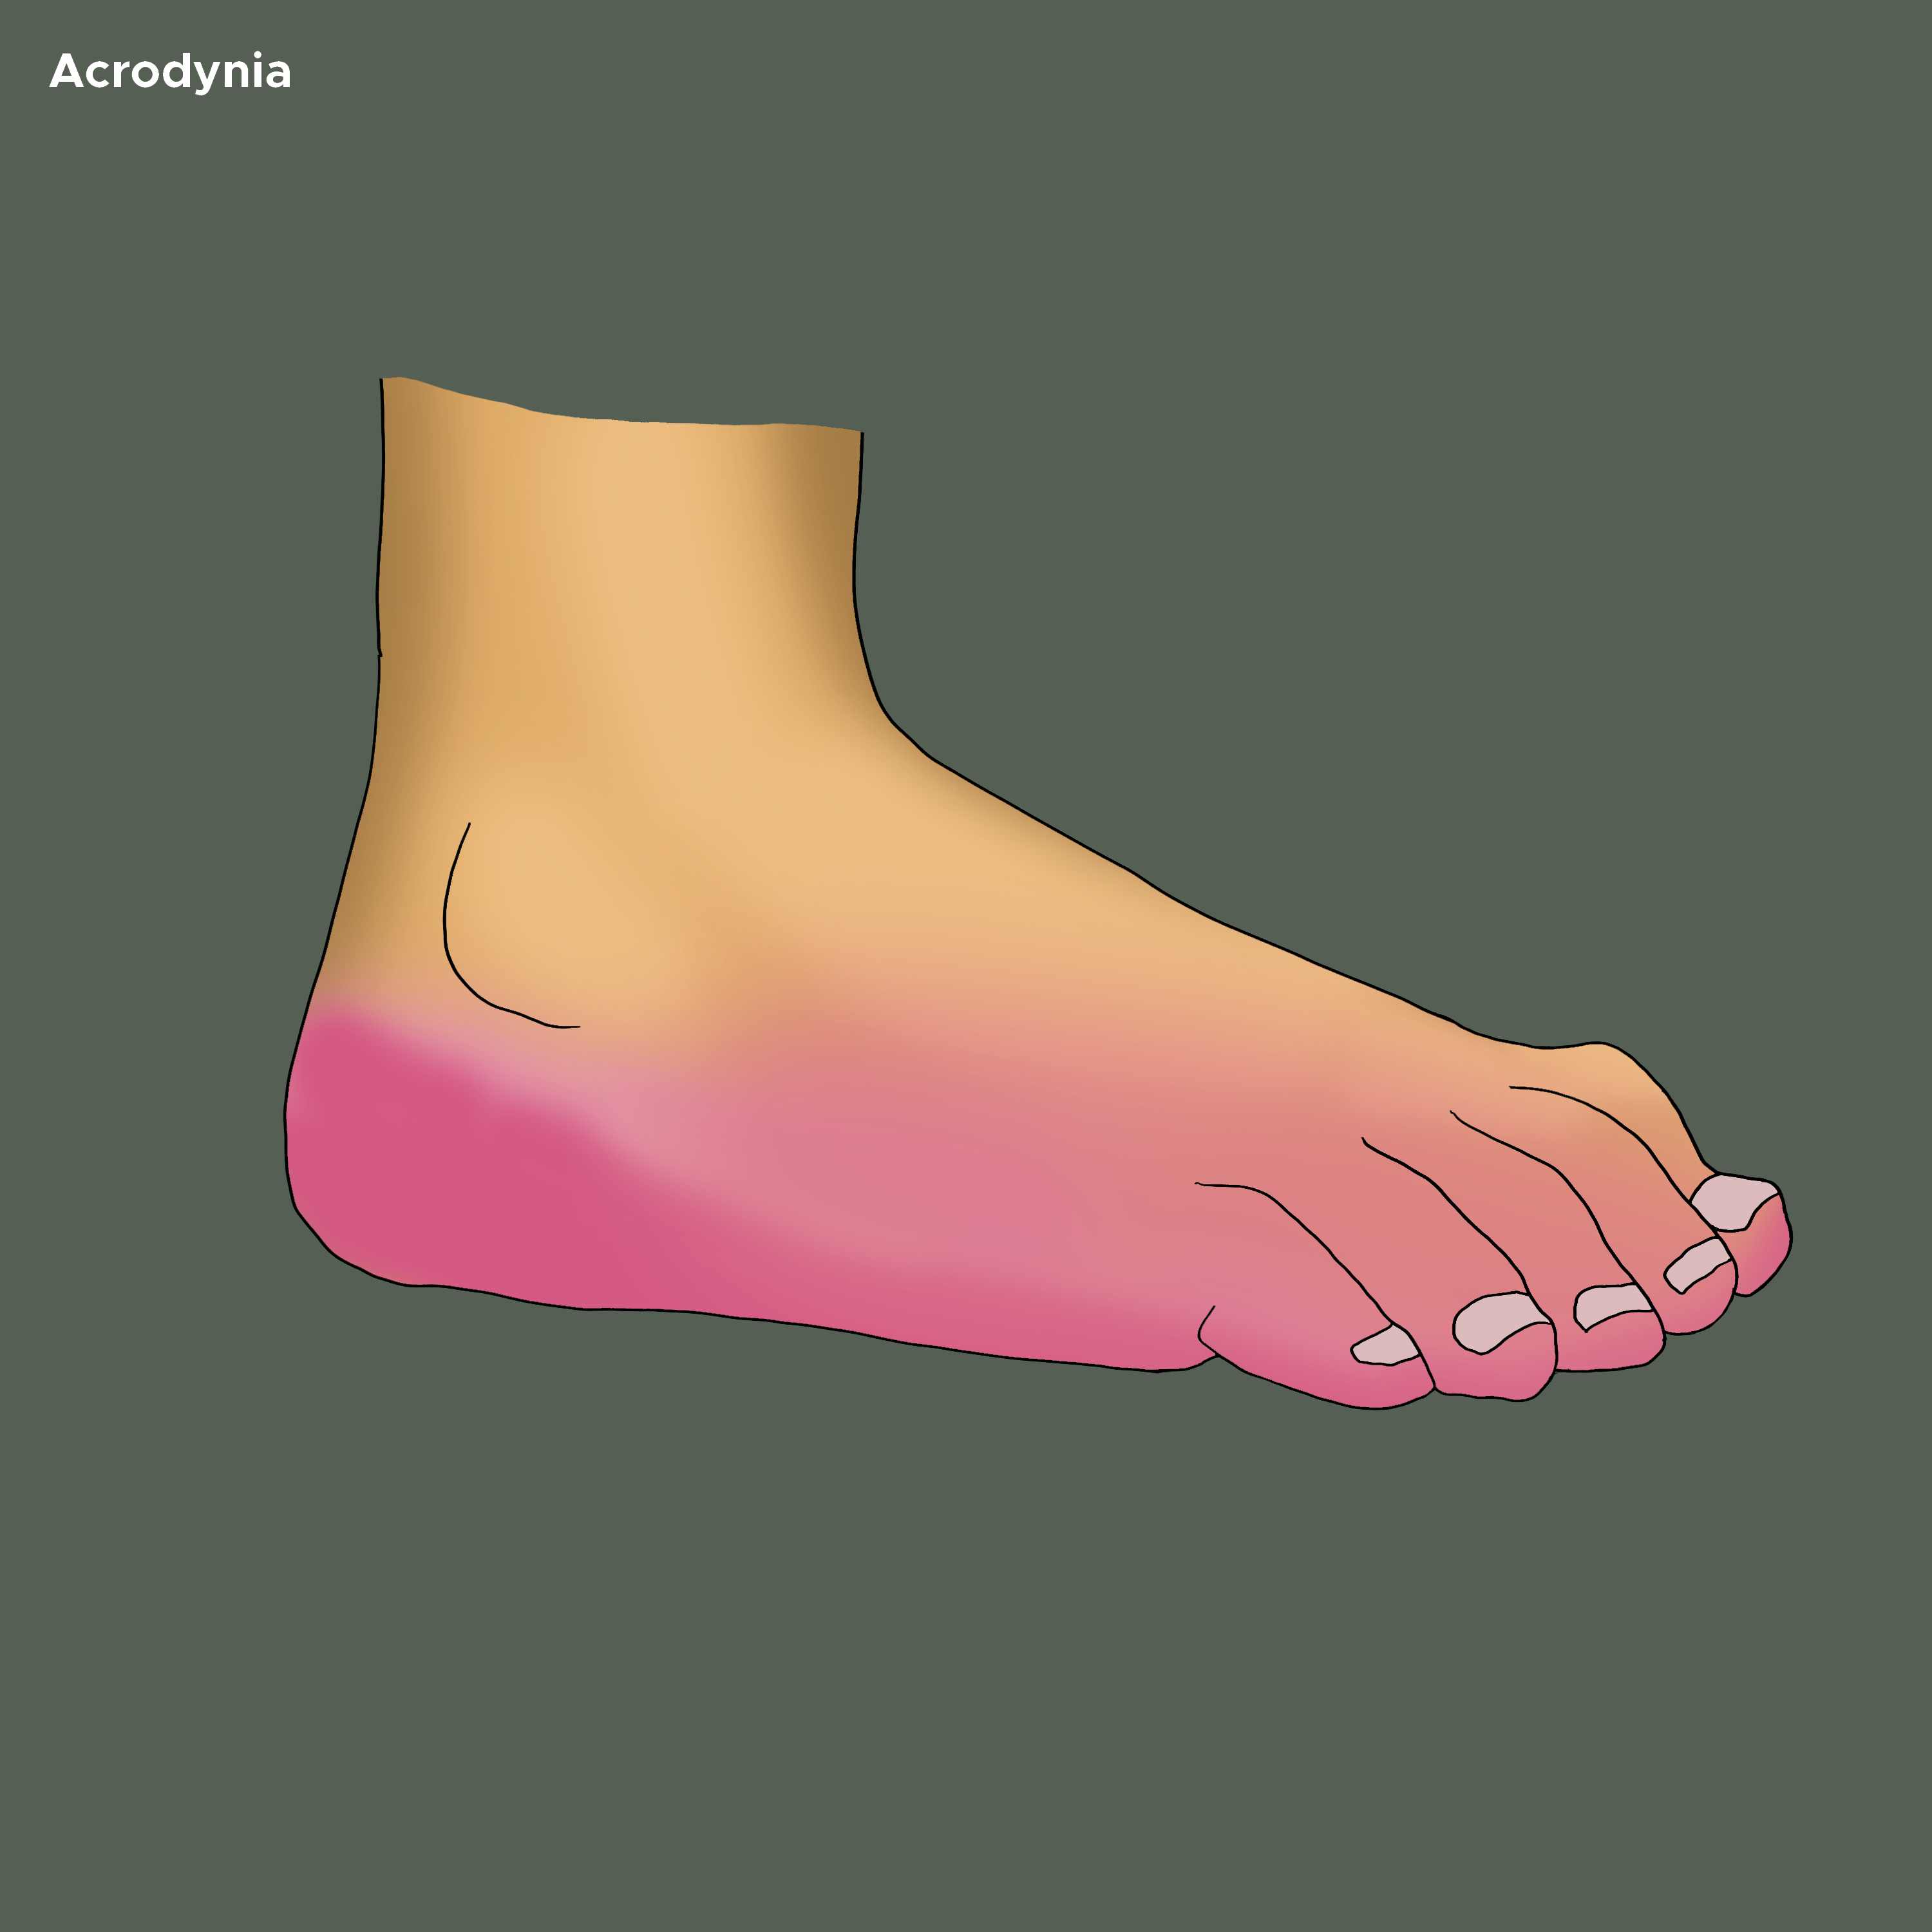 Illustration of Acrodynia on bottom of foot.